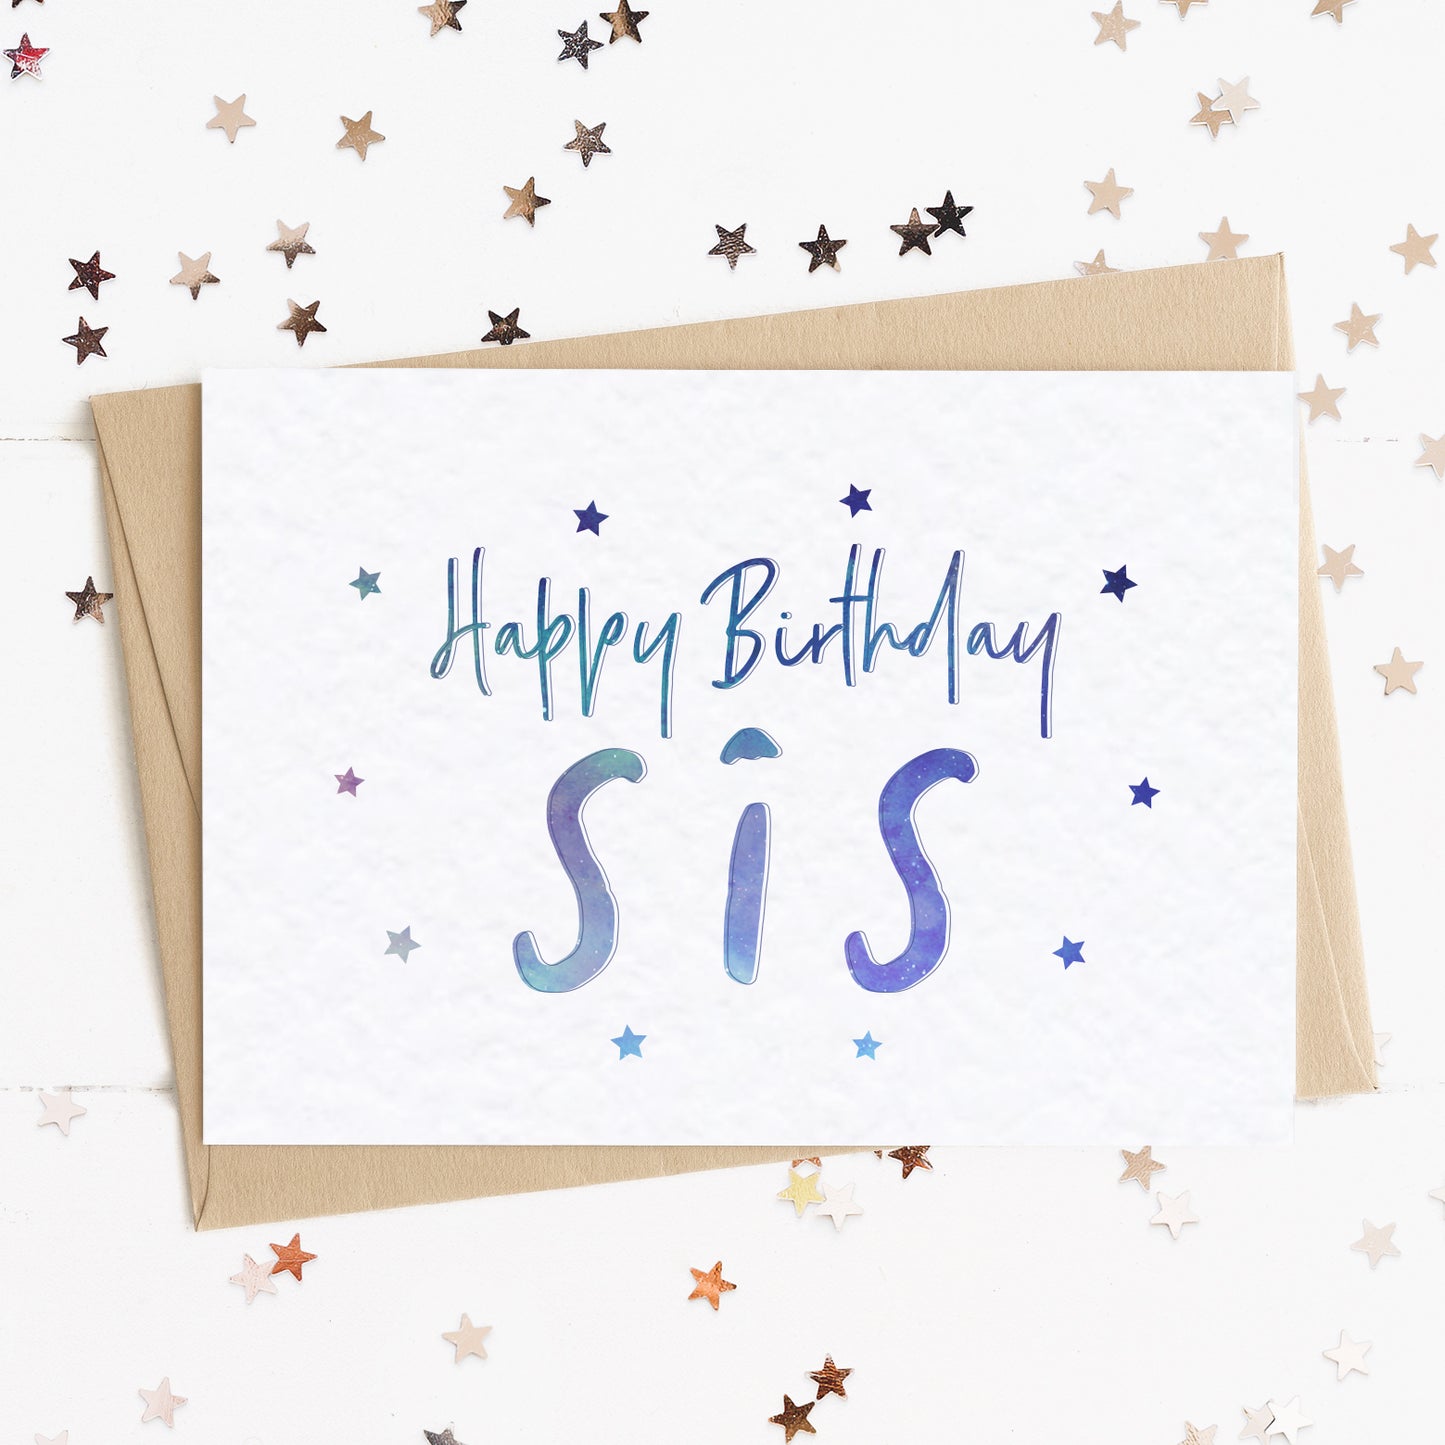 "Happy Birthday Sis" Celestial Star Card